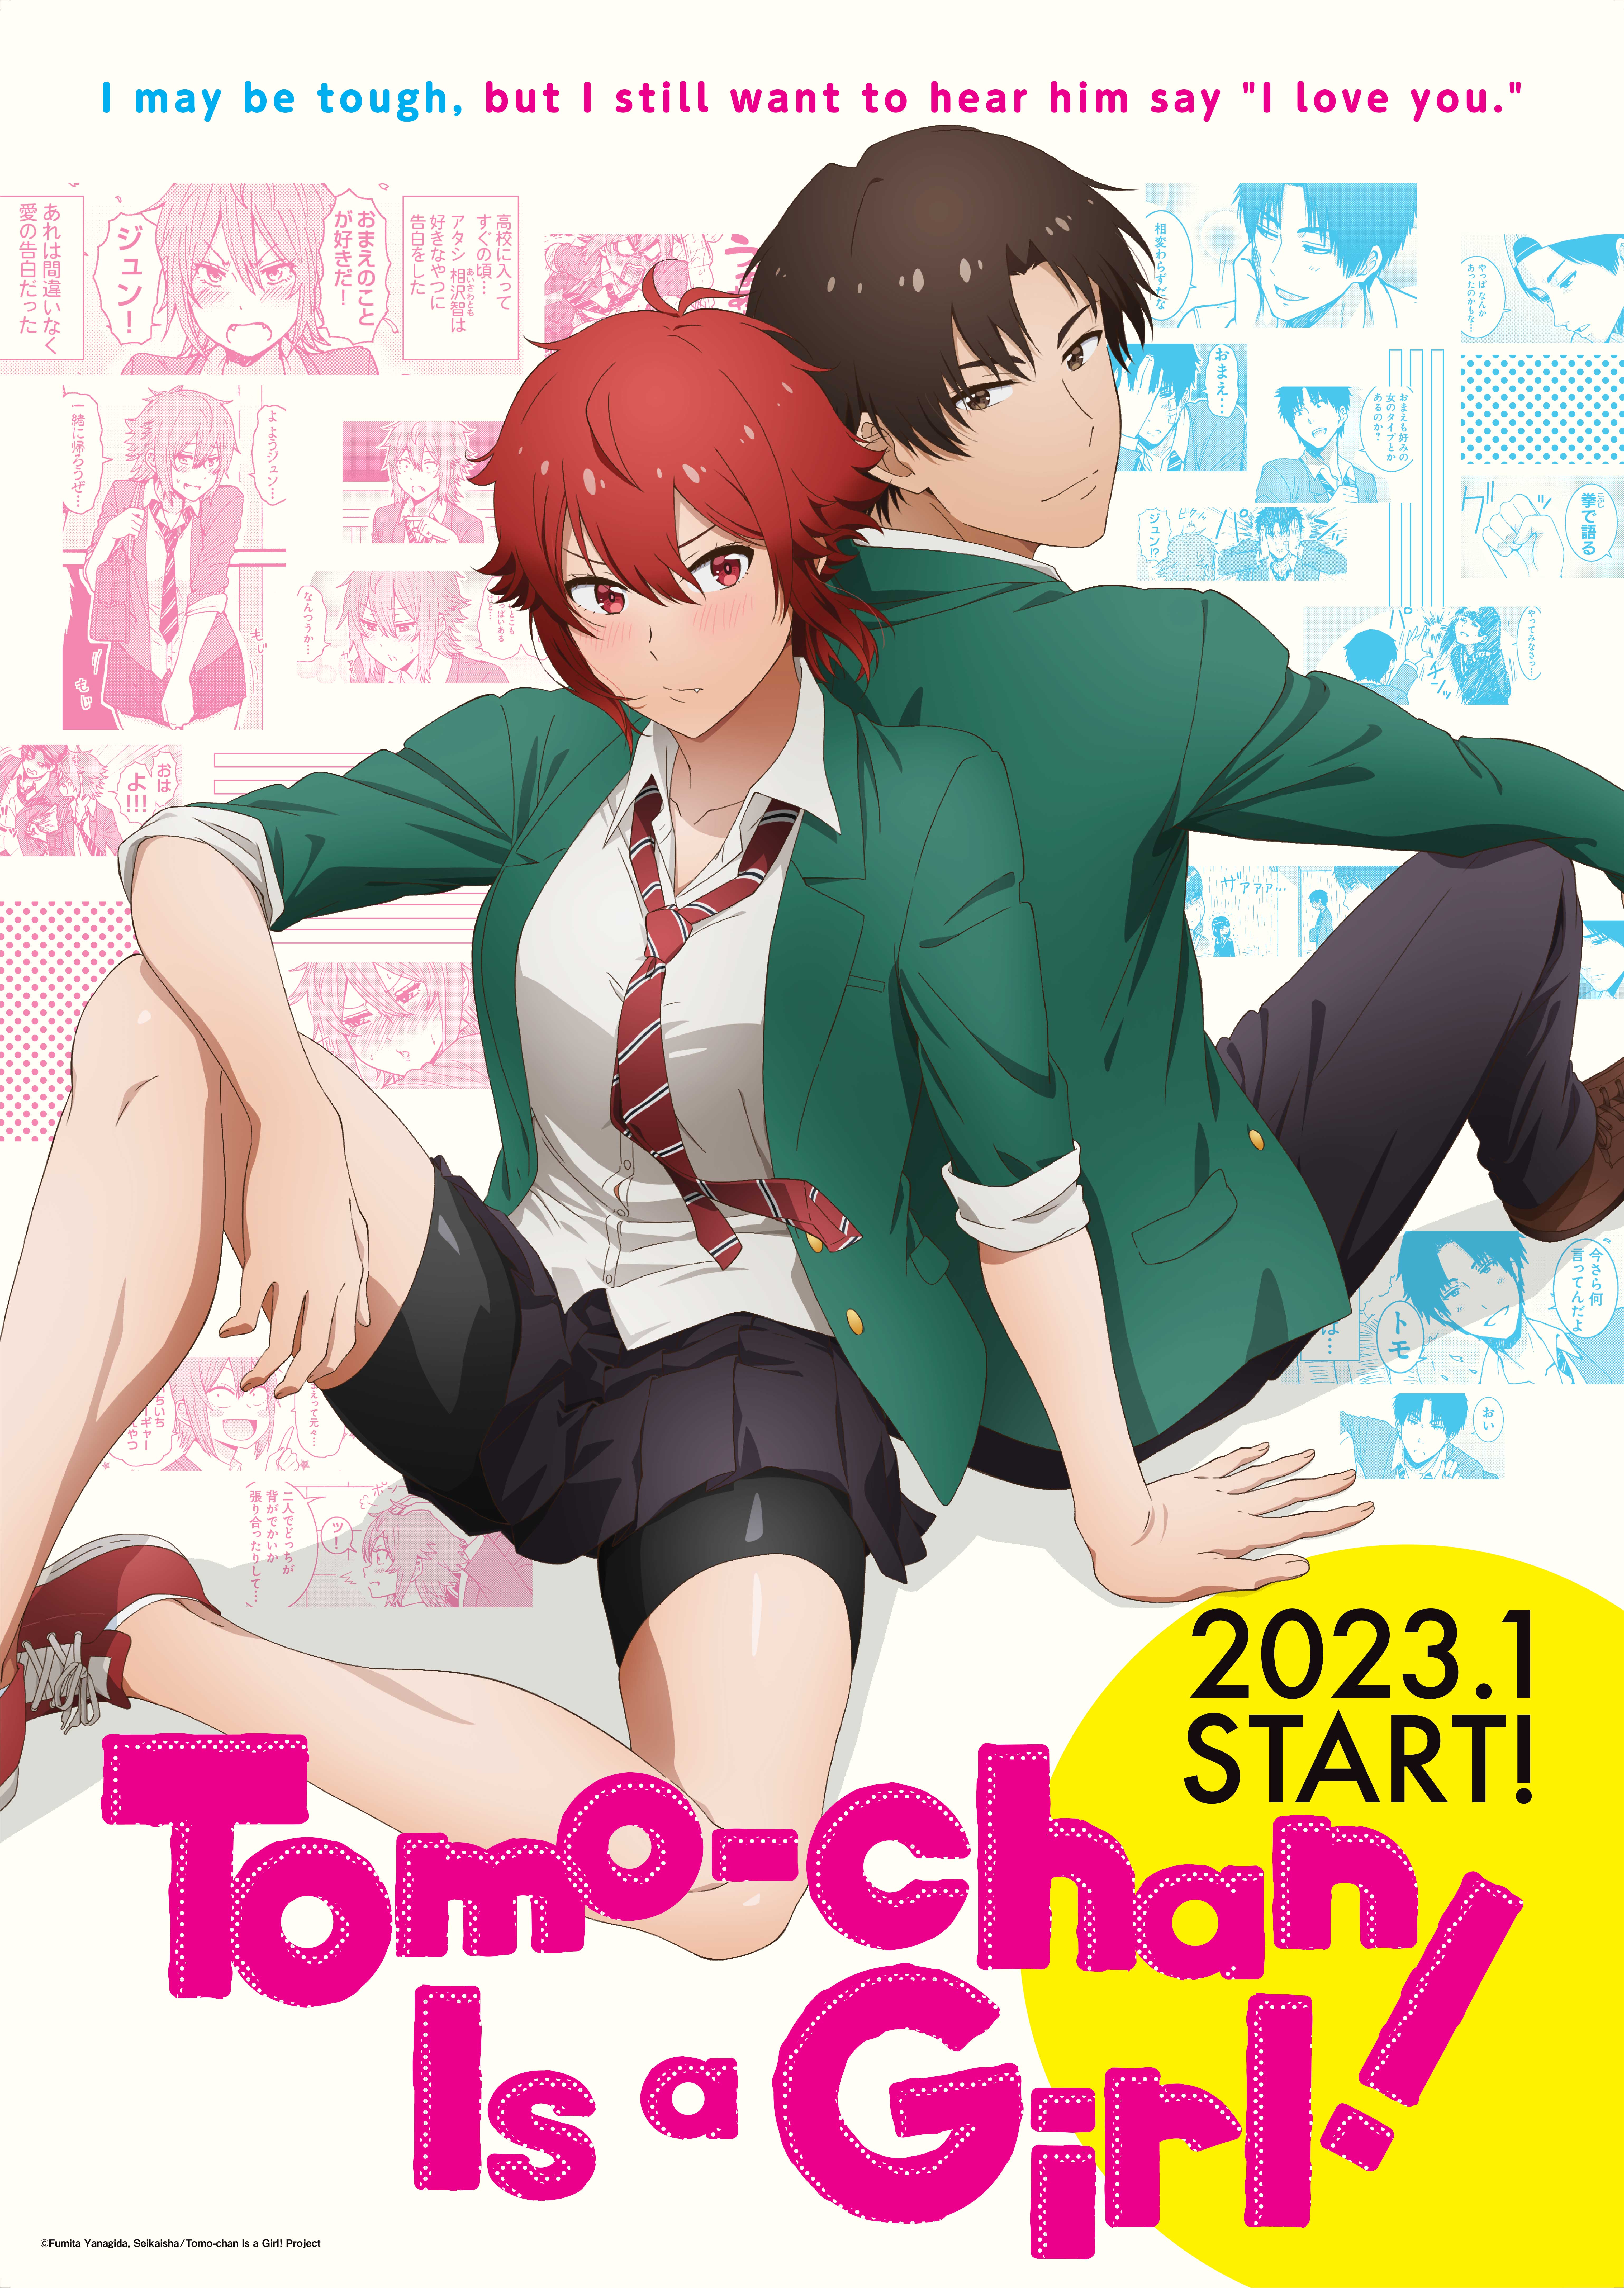 Tomo-chan Is a Girl Episode 10 Review: Jun's Feelings